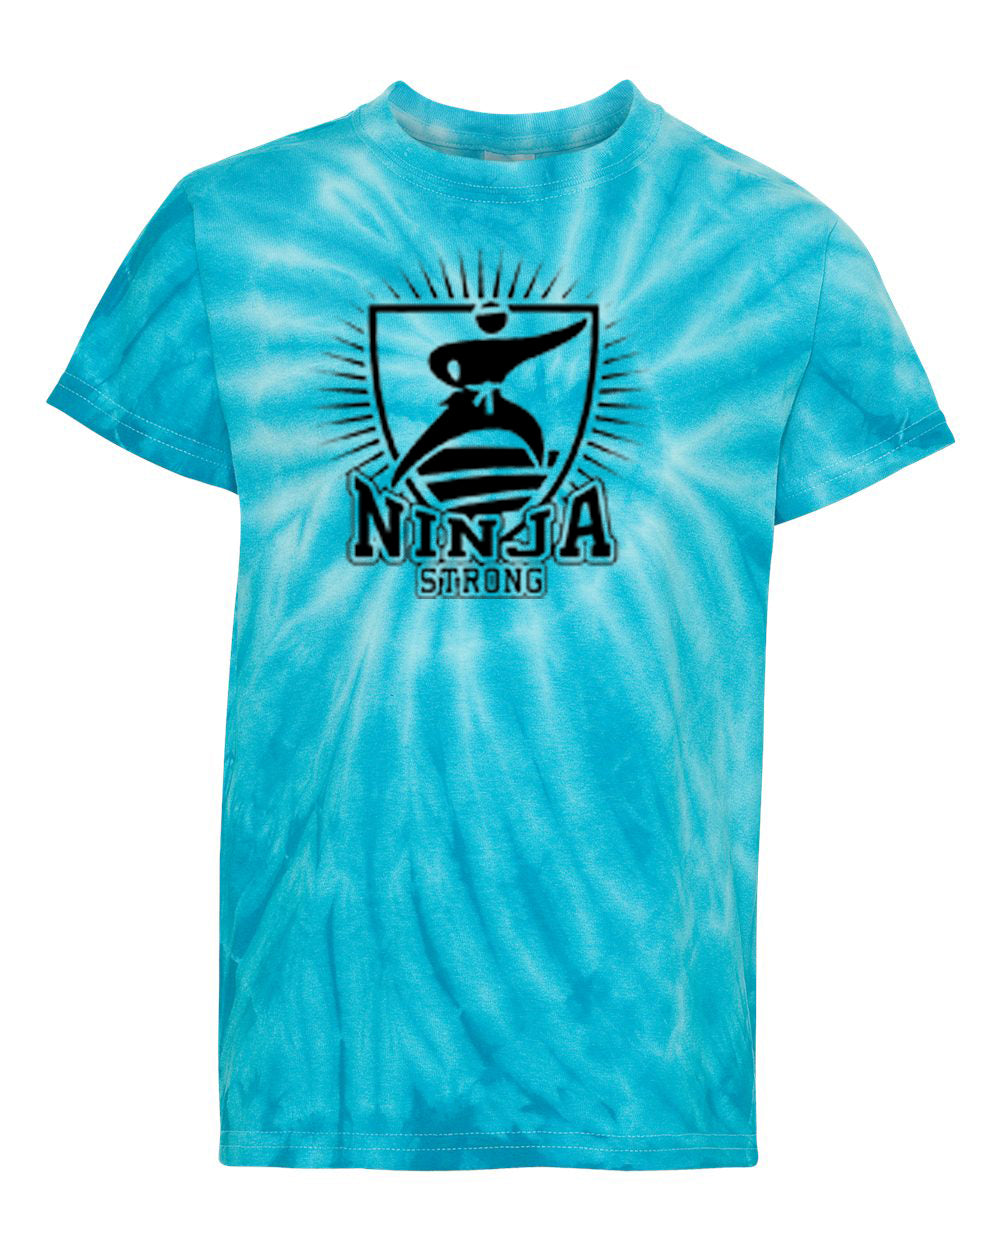 Ninja Strong Youth Tie Dye T-Shirt